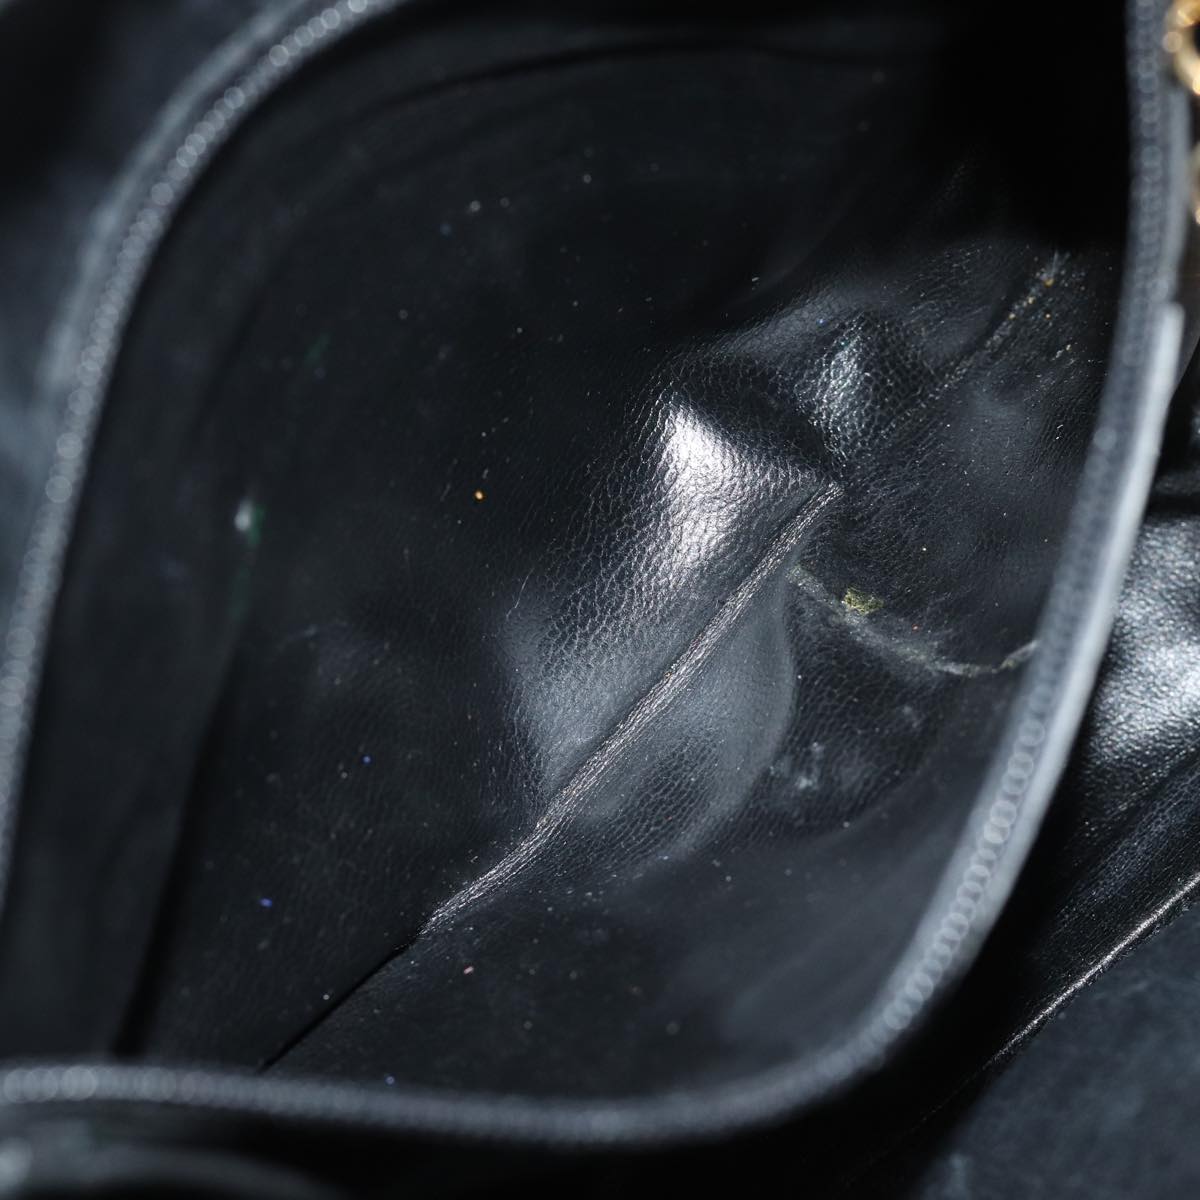 Salvatore Ferragamo Shoulder Bag Leather Black Auth bs14800